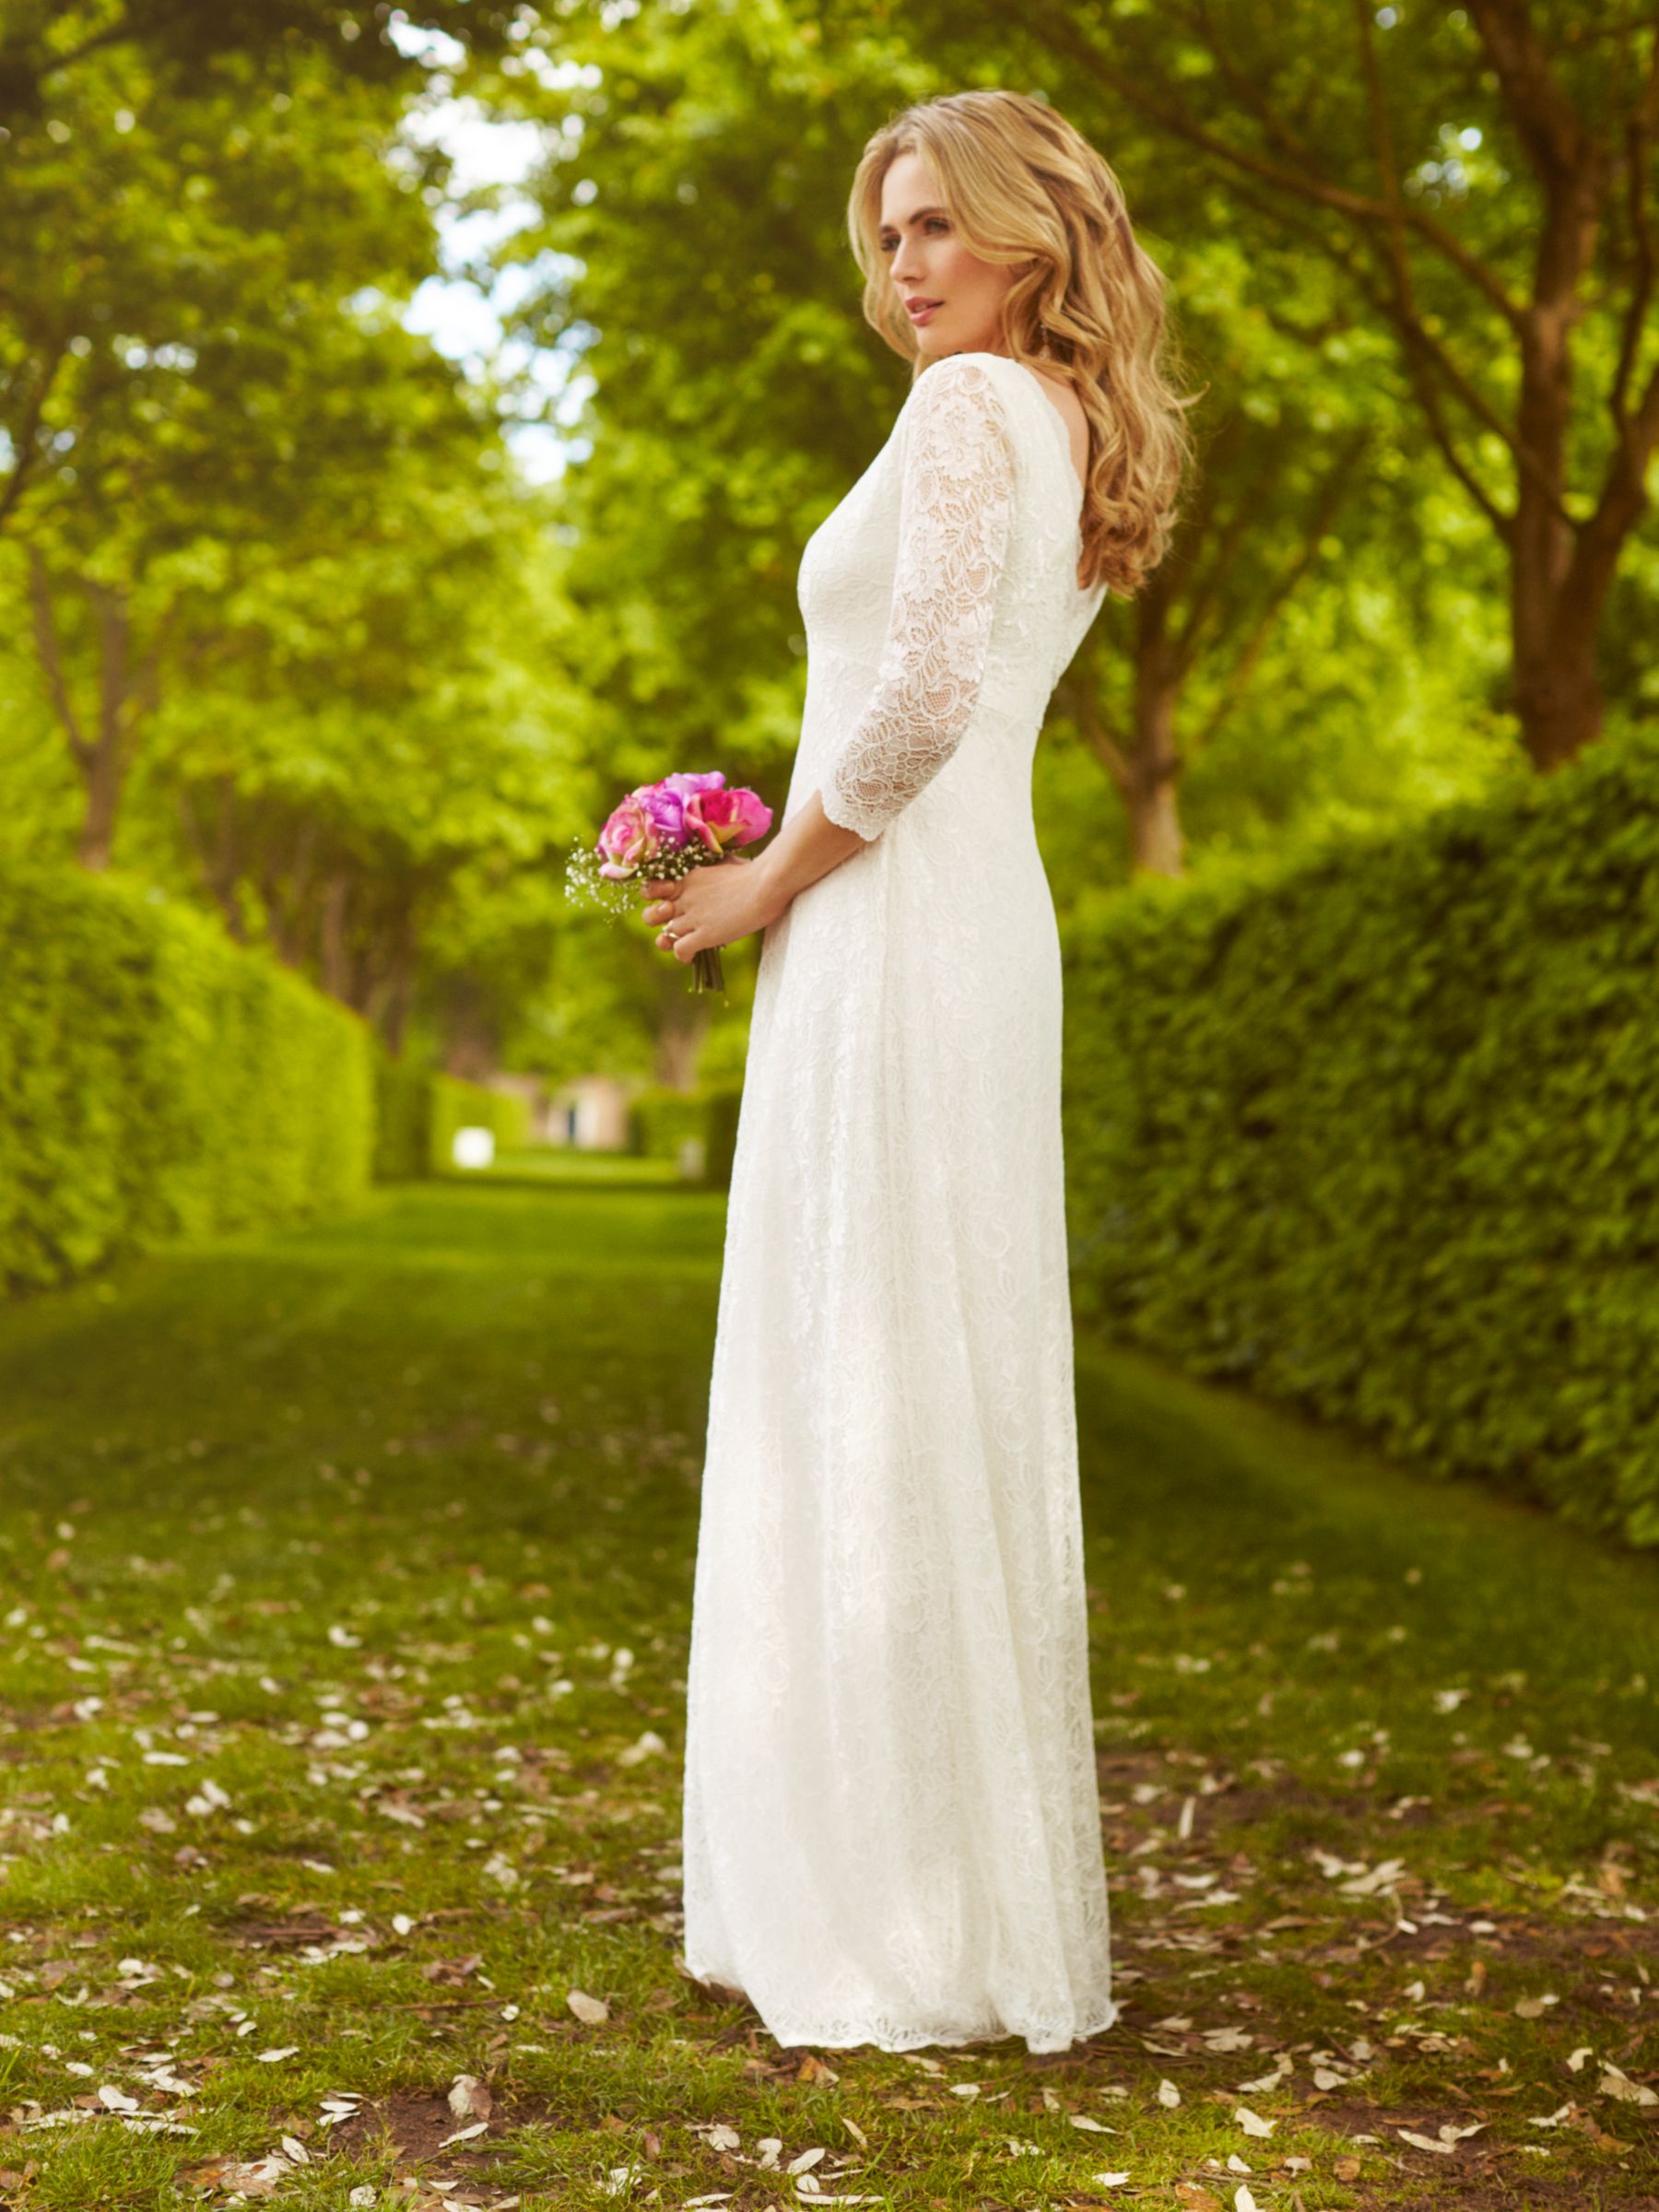 Buy Alie Street Anya Corded Lace Wedding Dress, Ivory Online at johnlewis.com